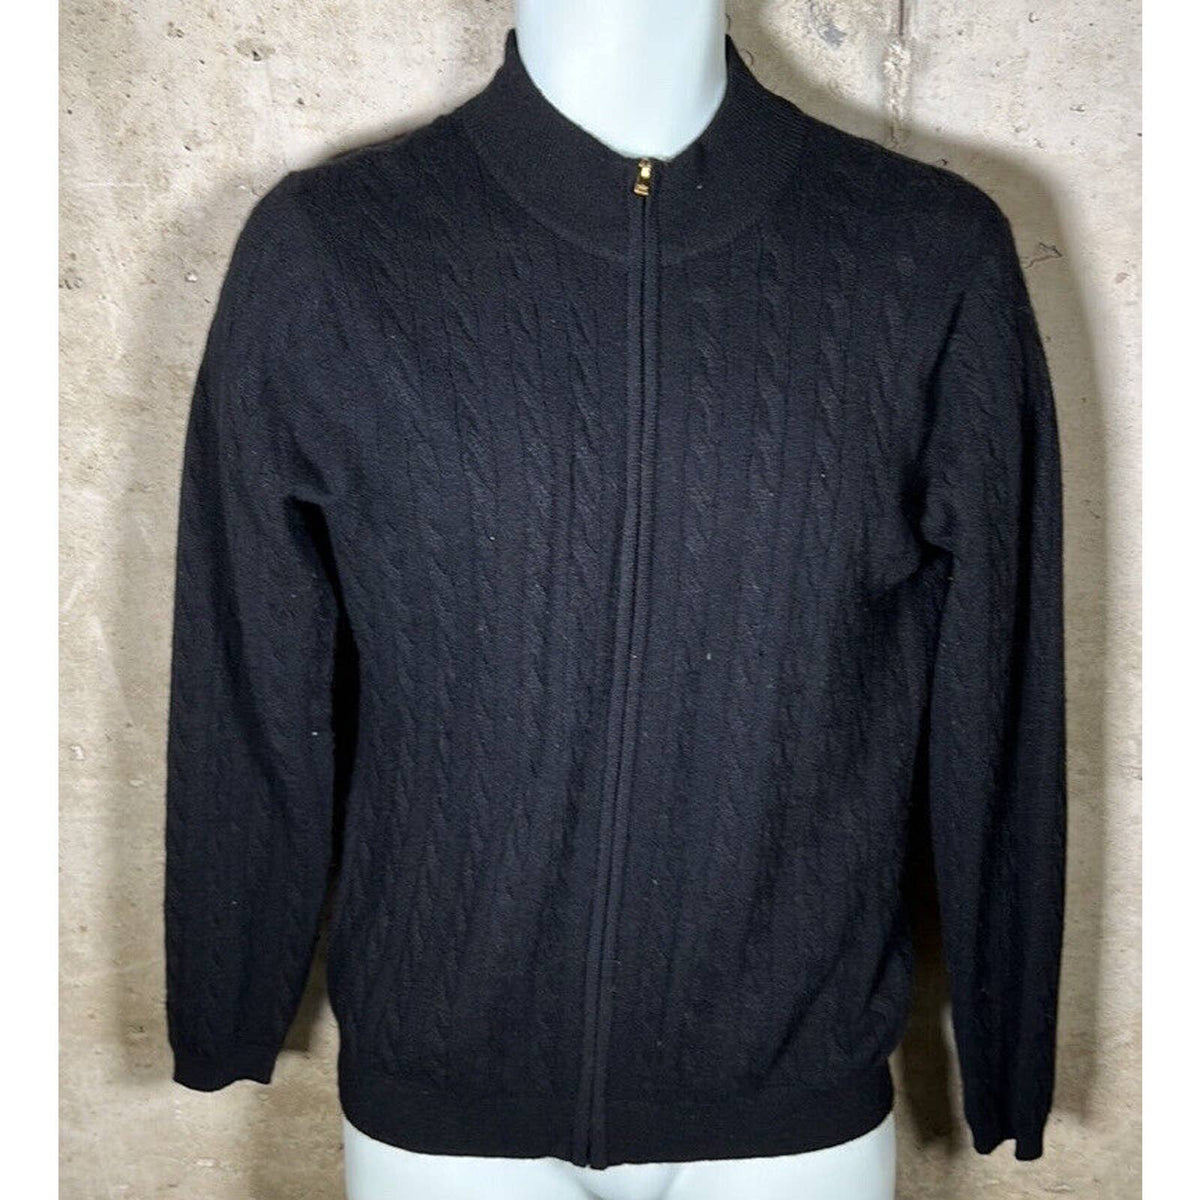 Peter Millar Black Knit 100% Cashmere Full Zip Sweater Sz. Large